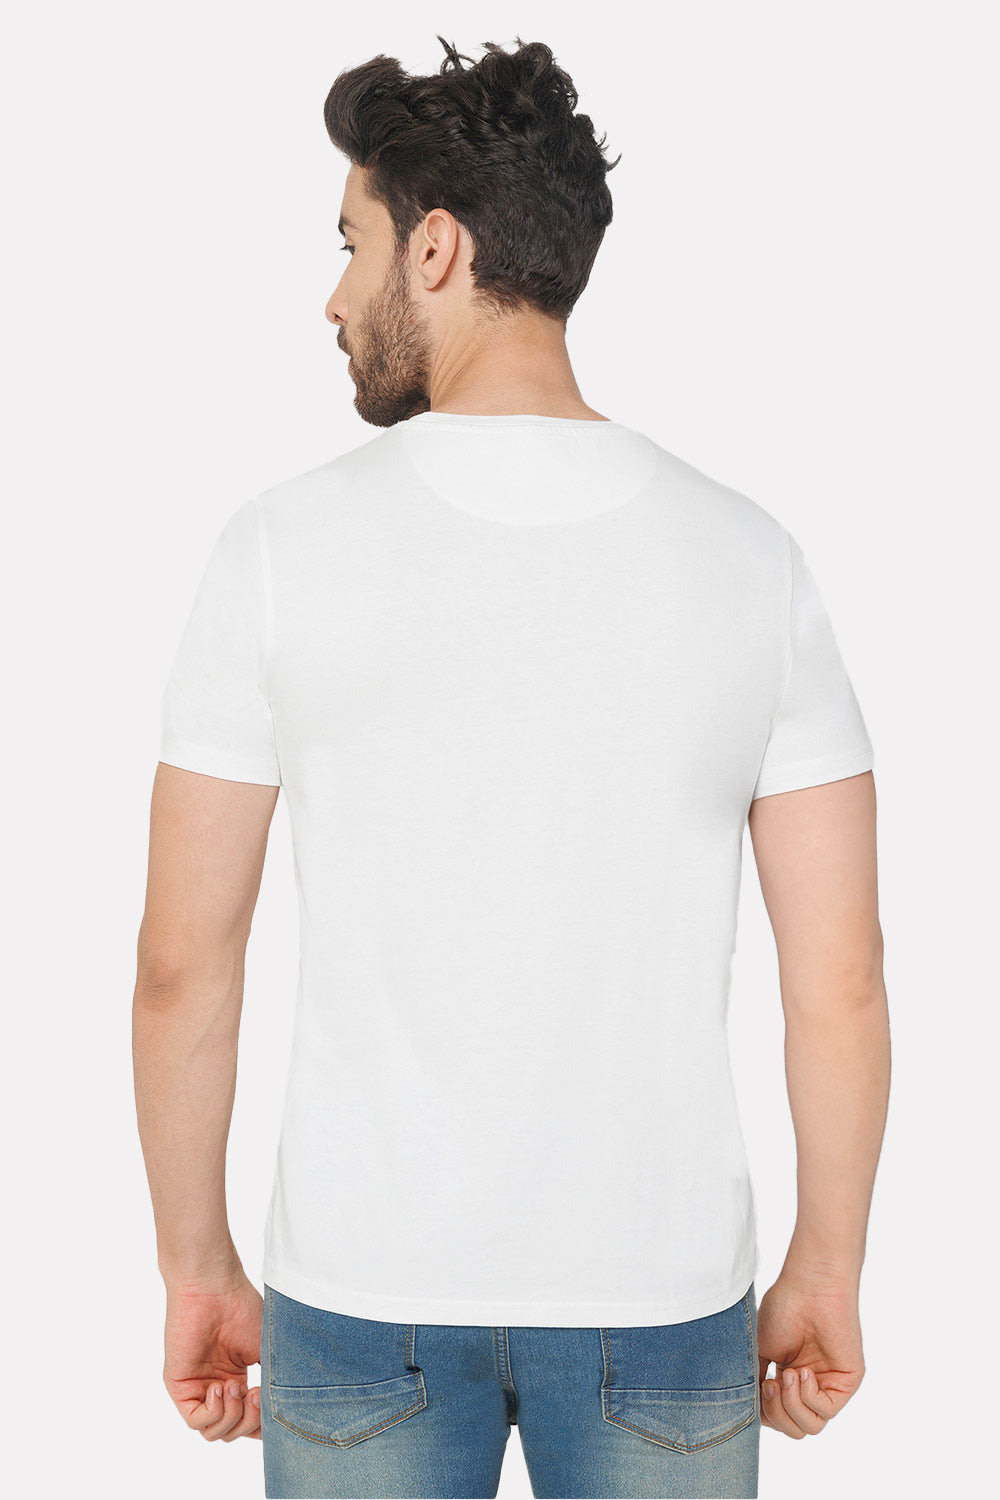 Enhance Men's Printed Crew Neck Casual T-Shirt - White - TS35